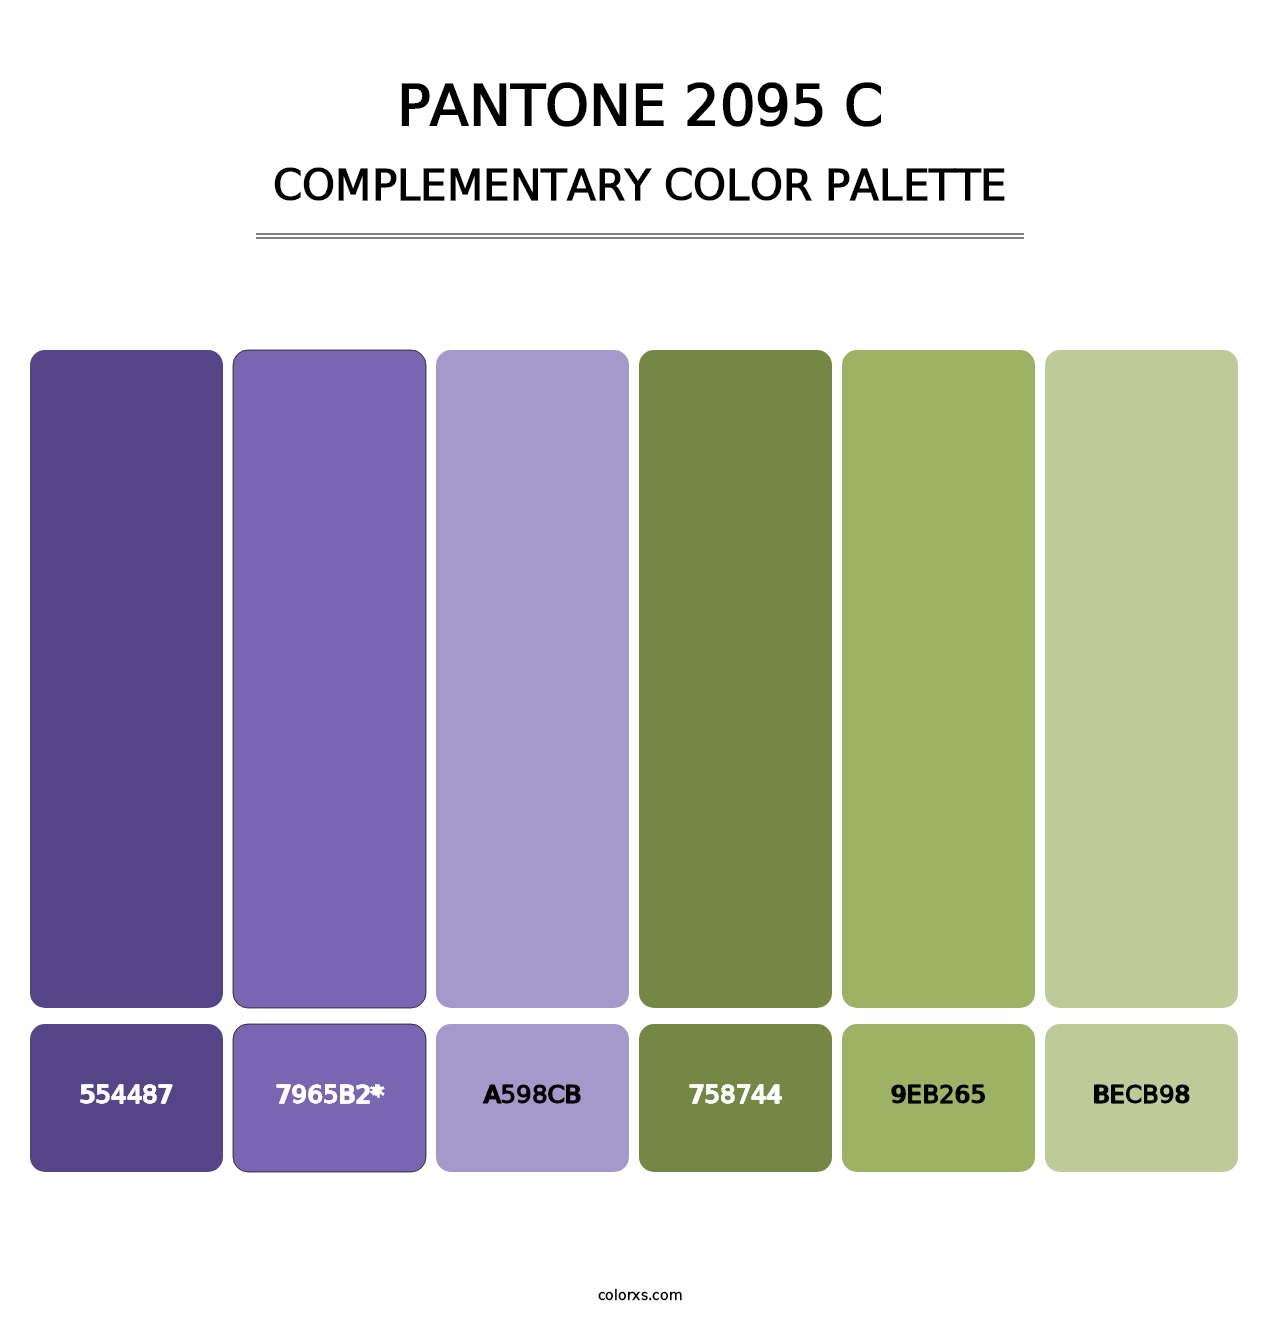 PANTONE 2095 C - Complementary Color Palette